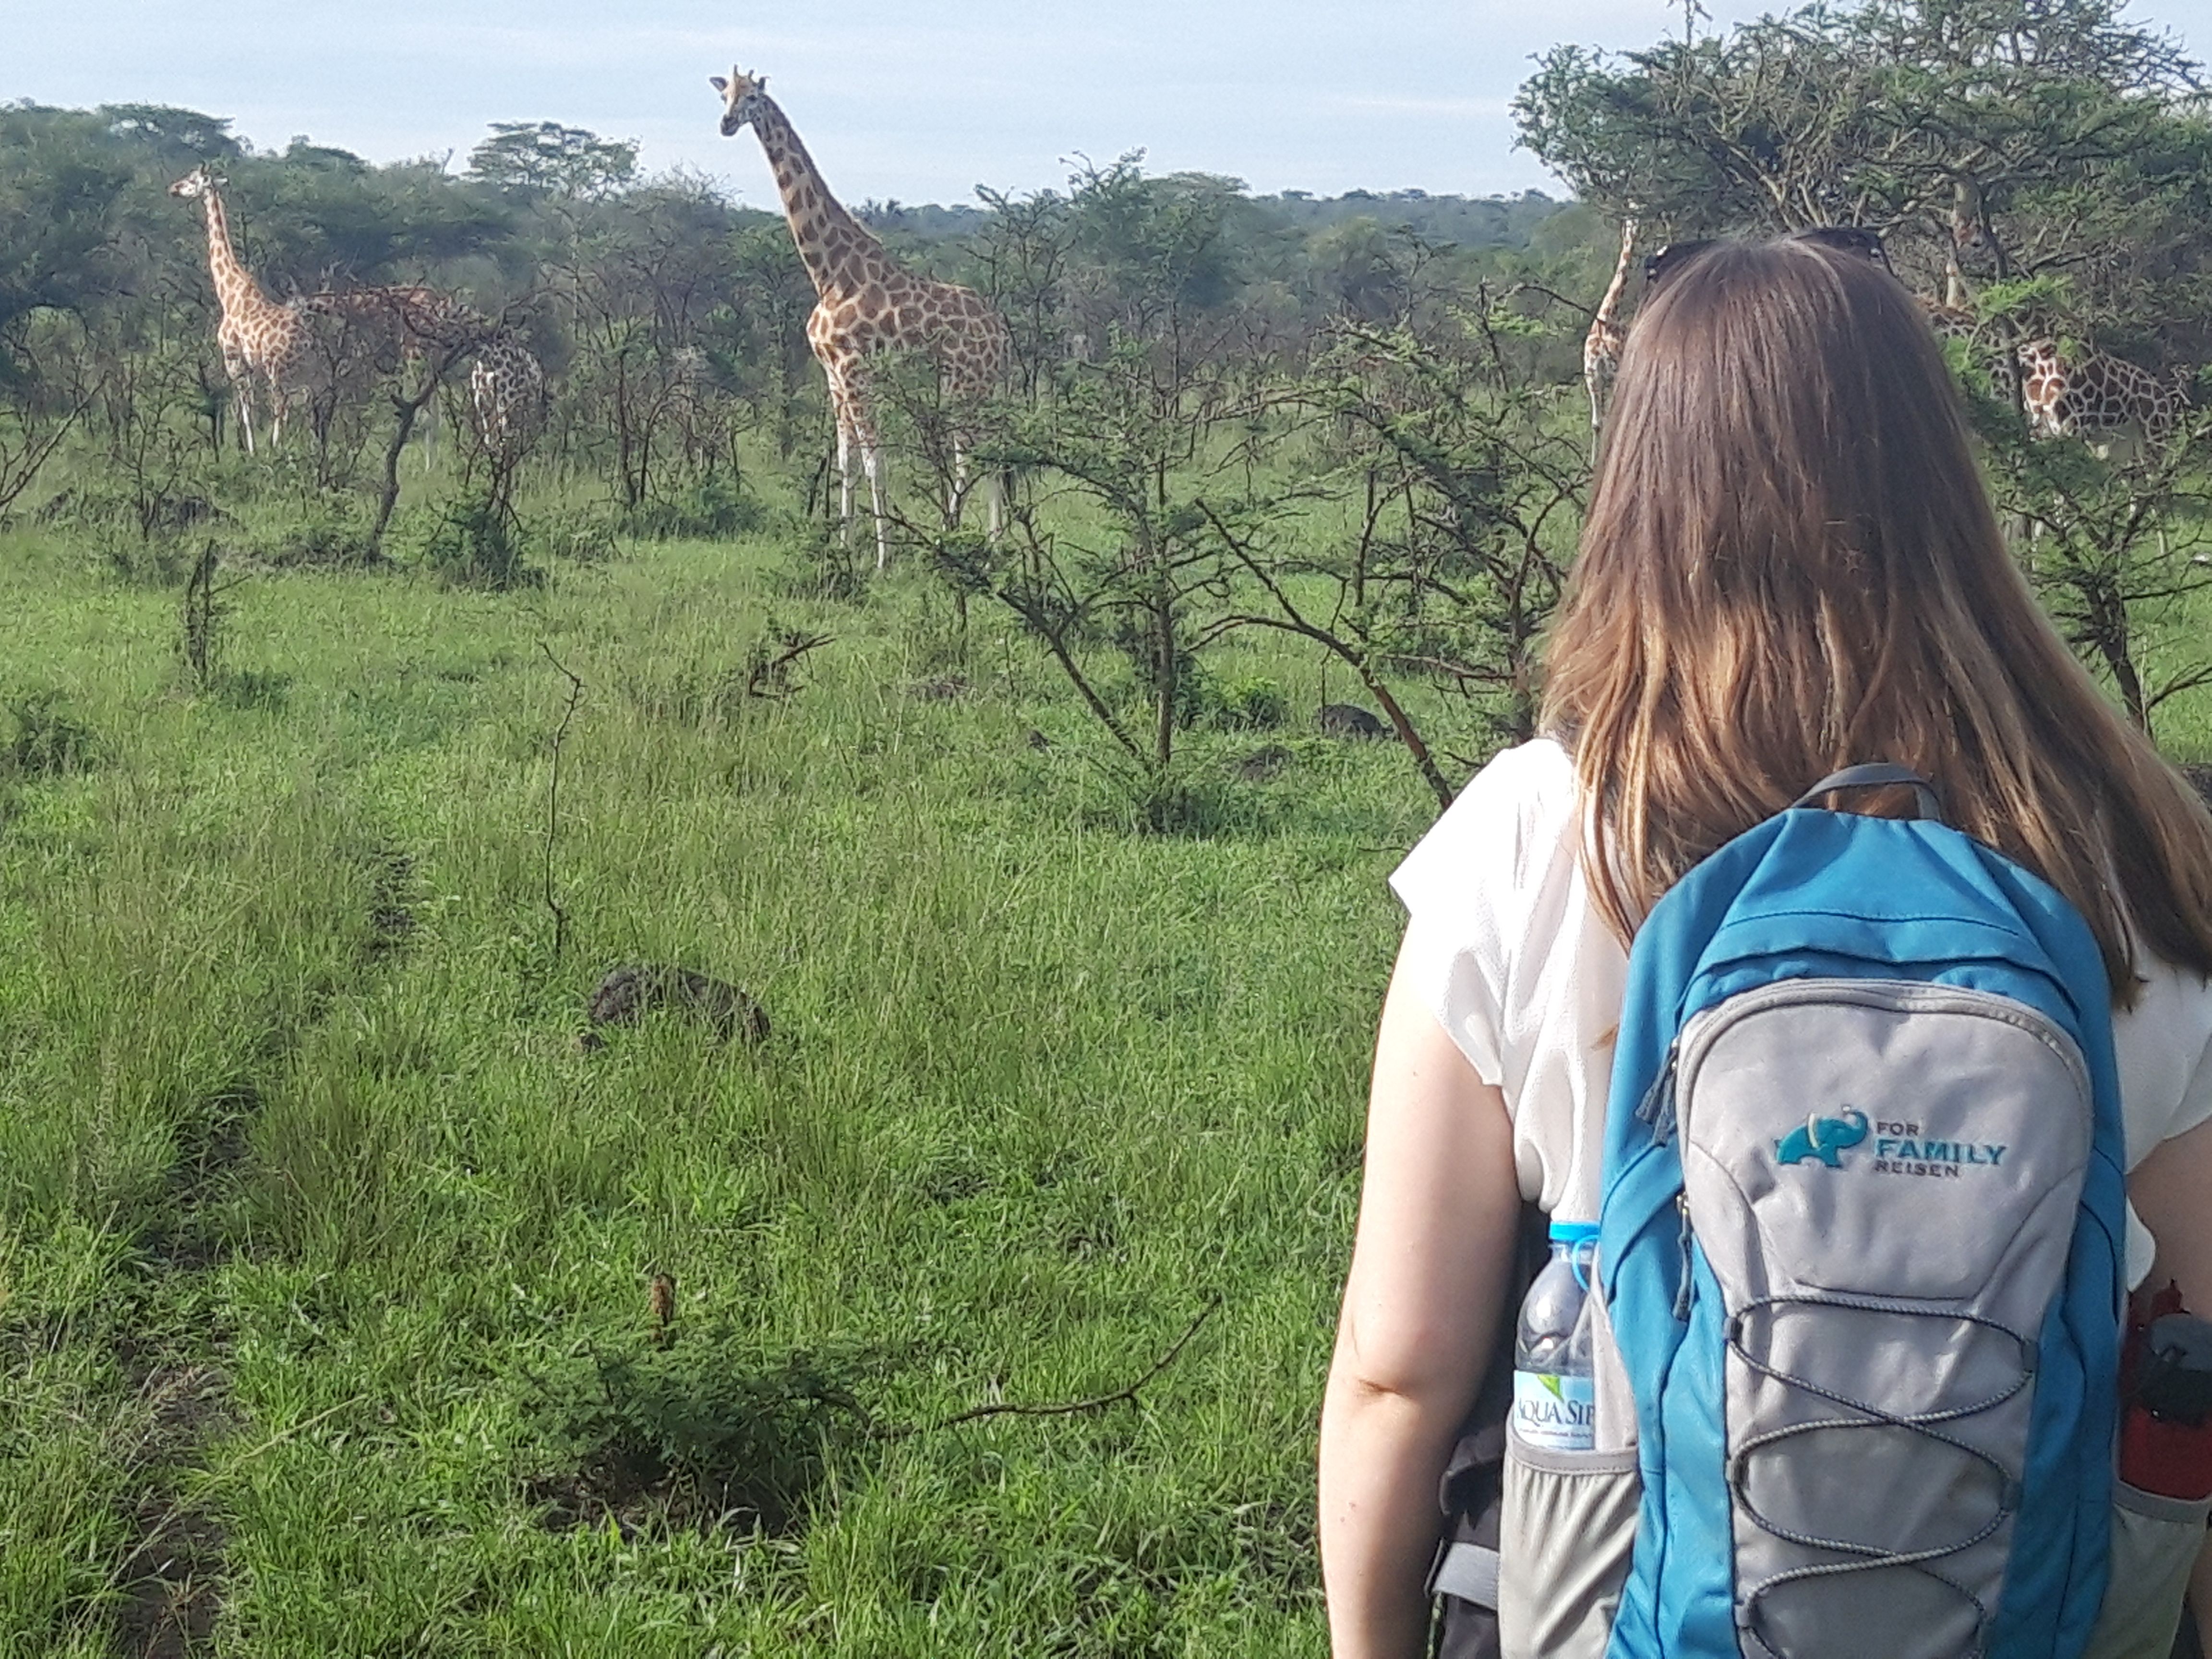 Svenja in Uganda - Familienreise nach Uganda - Nature Walk